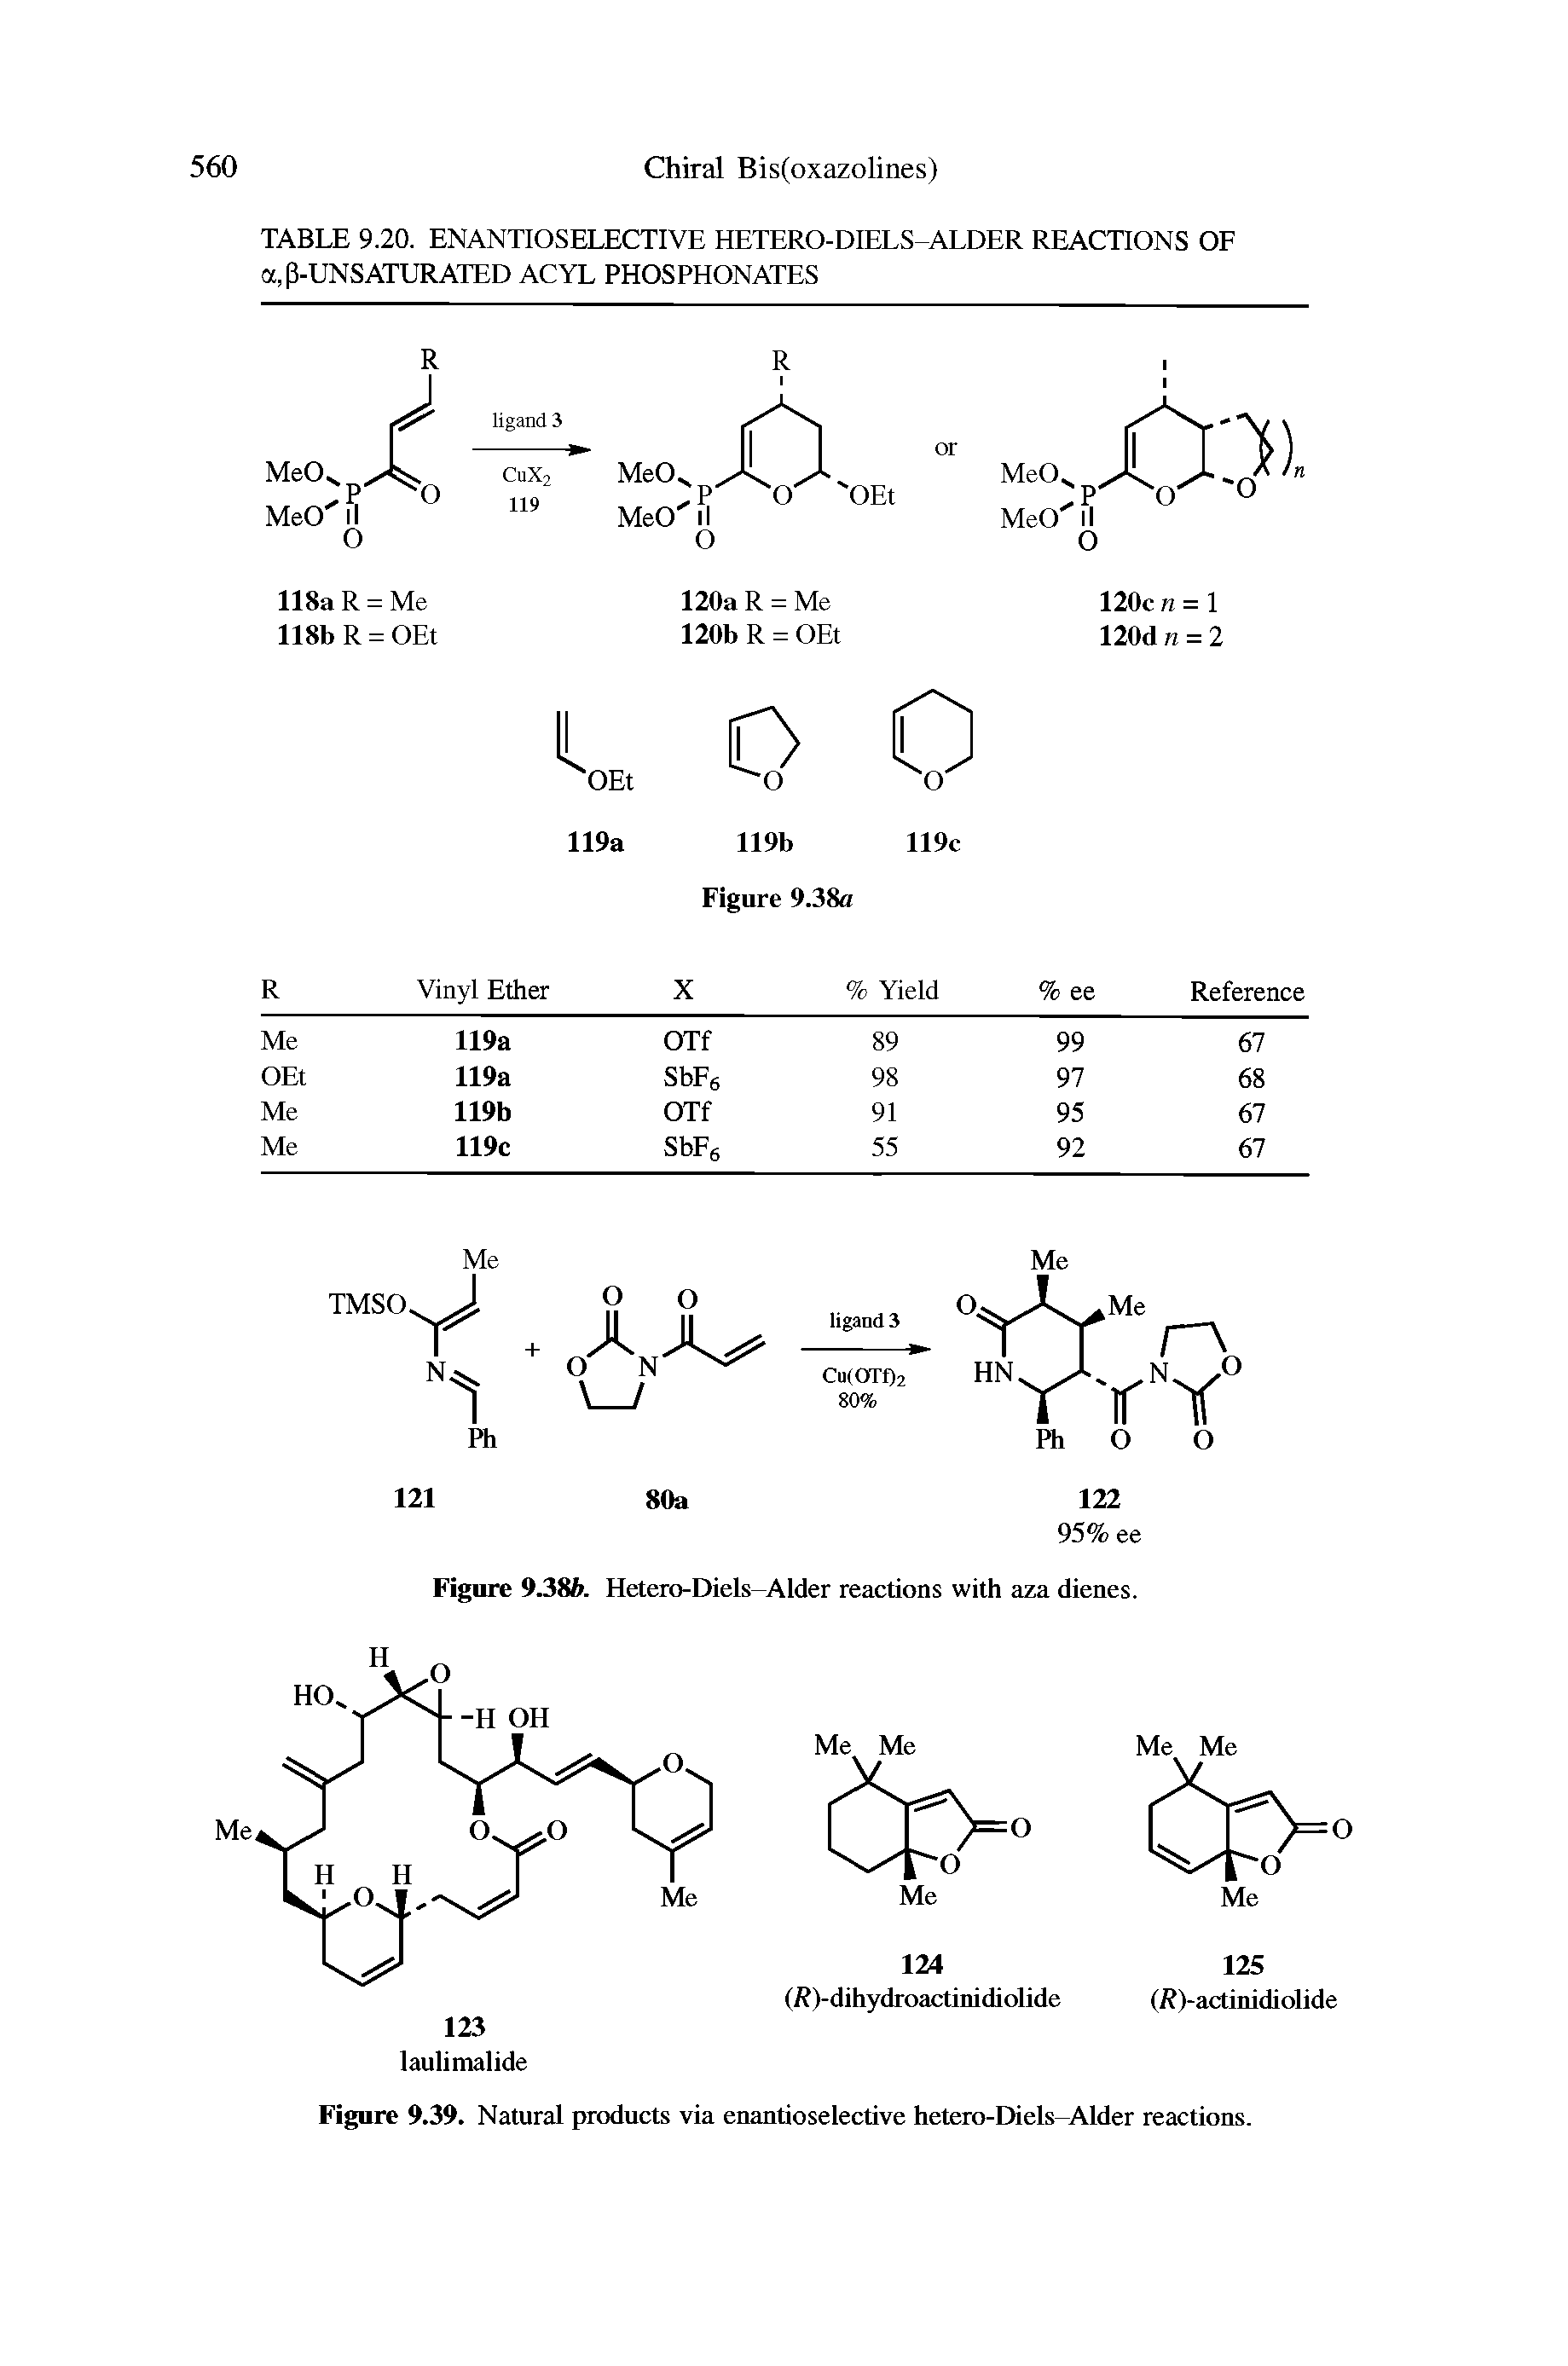 Figure 9.39. Natural products via enantioselective hetero-Diels-Alder reactions.